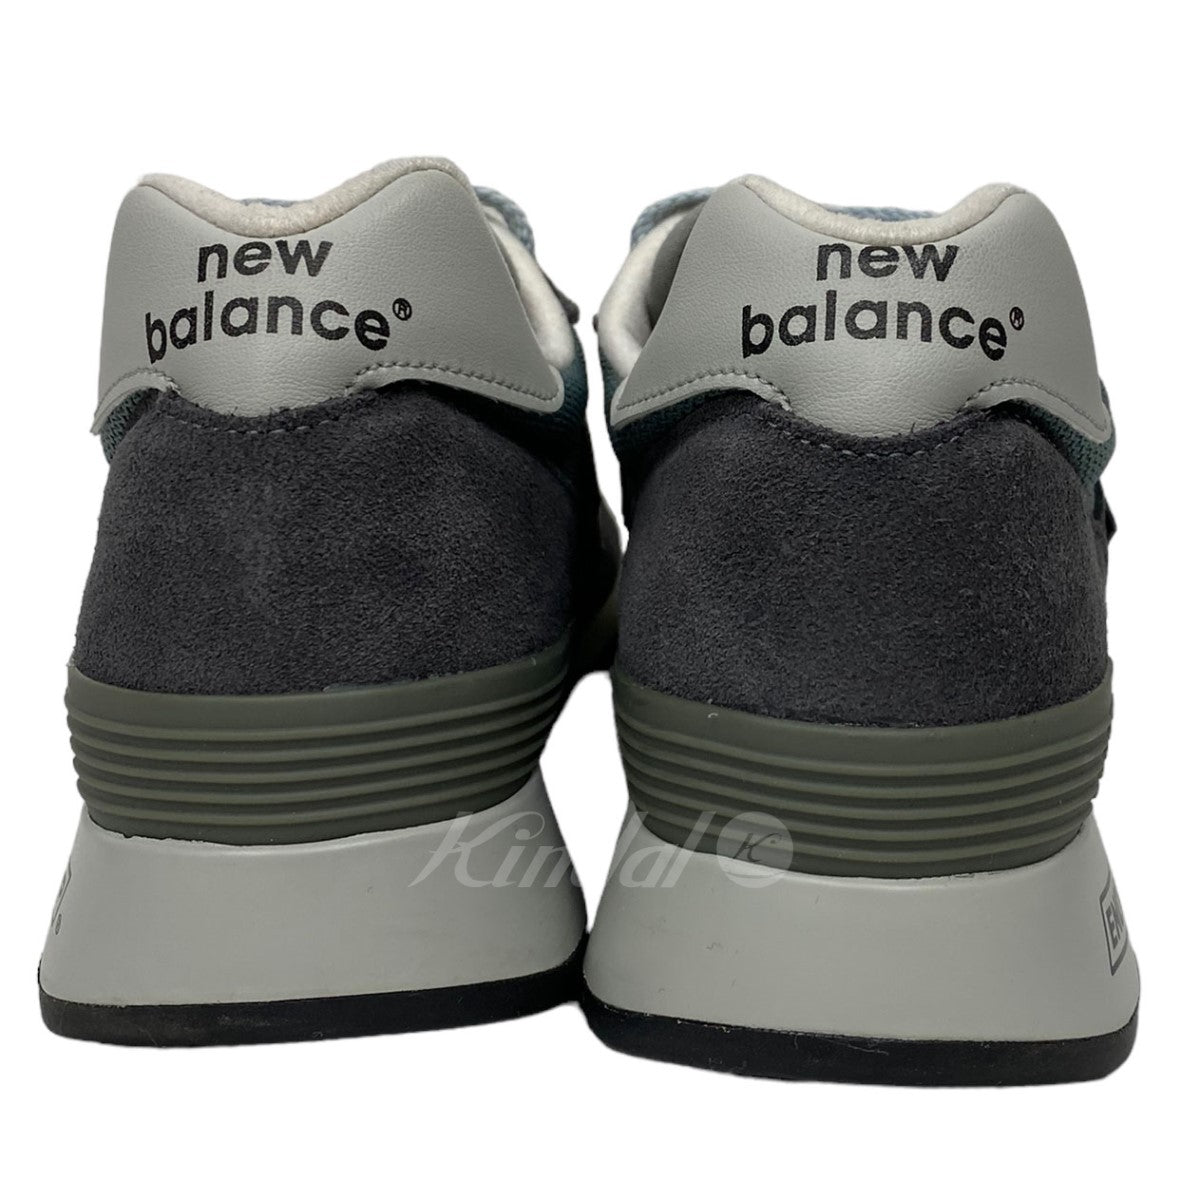 NEW BALANCE(ニューバランス) M1300CLS Made in USAスニーカー靴 ...